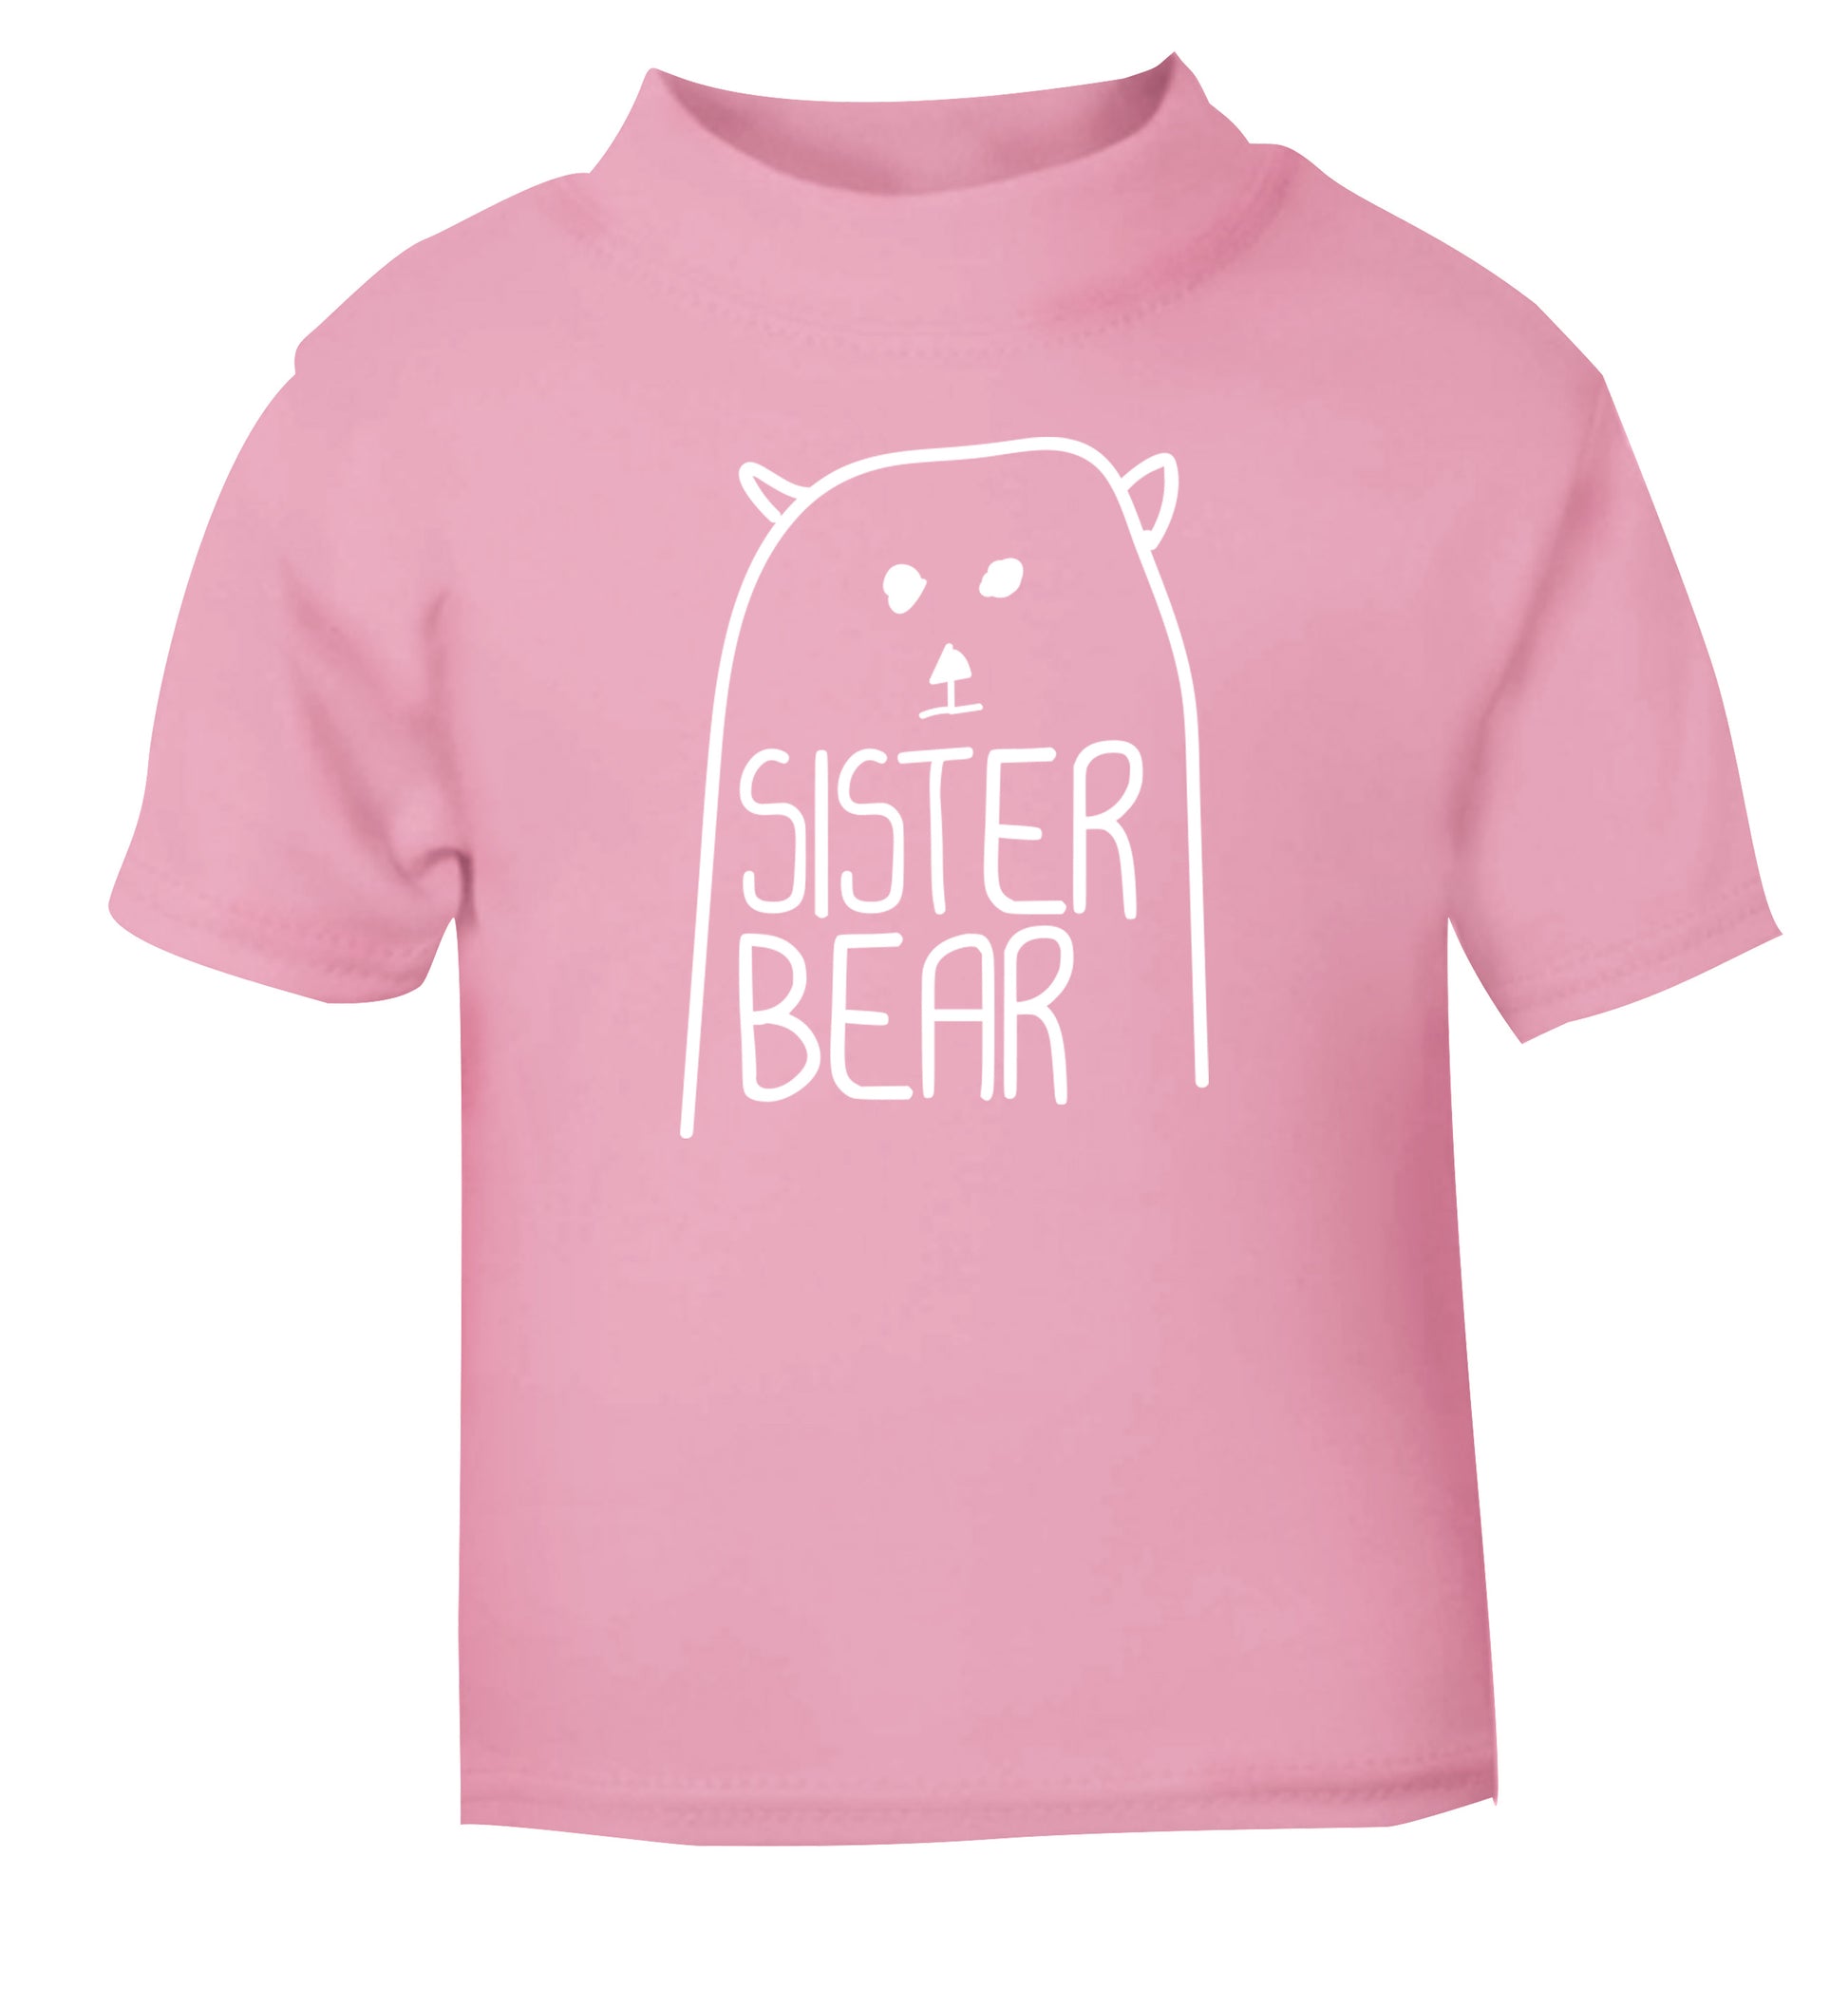 Sister bear light pink Baby Toddler Tshirt 2 Years